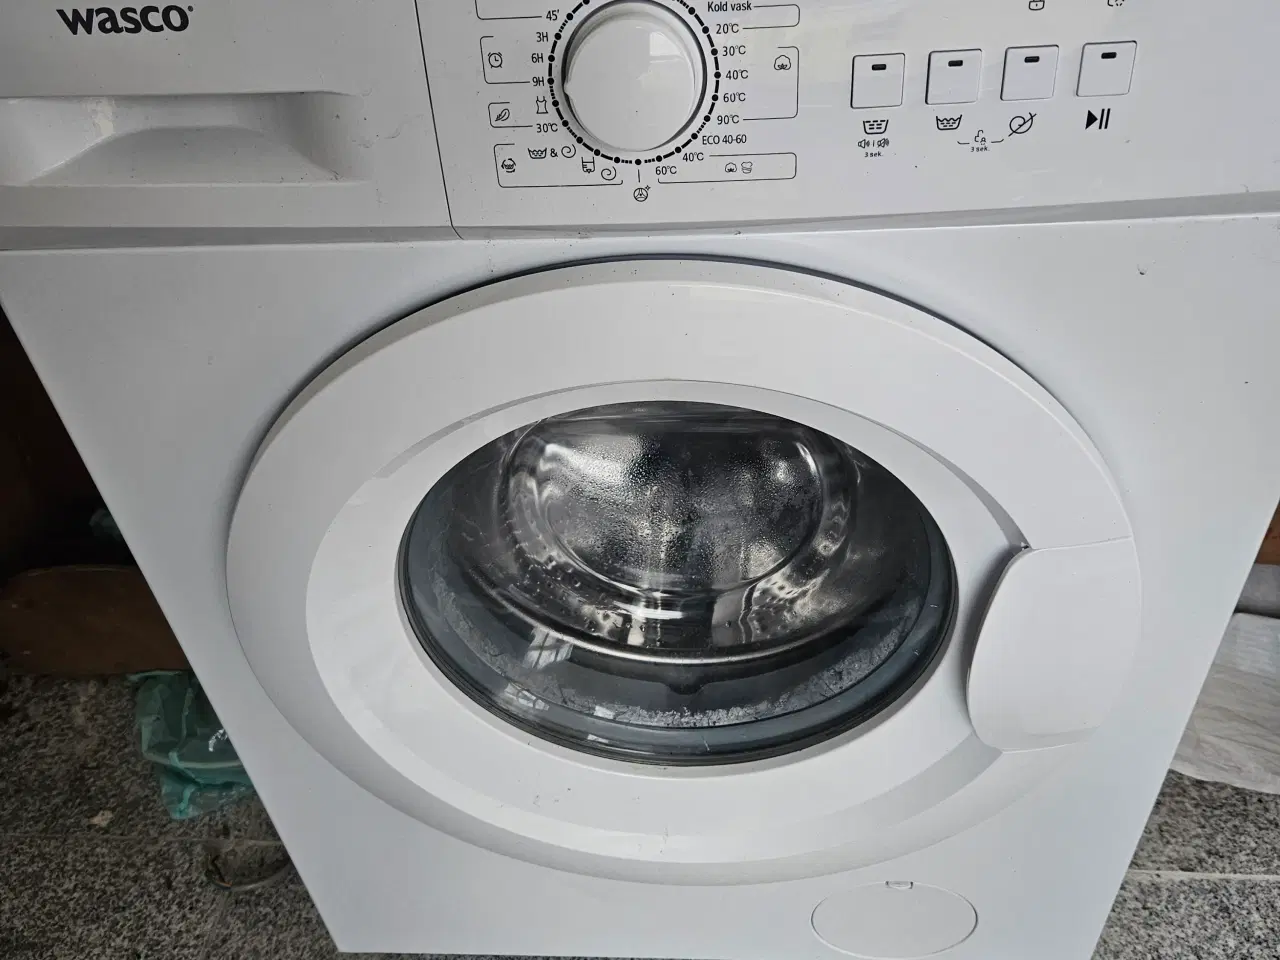 Billede 1 - Vaskemaskine wasco 